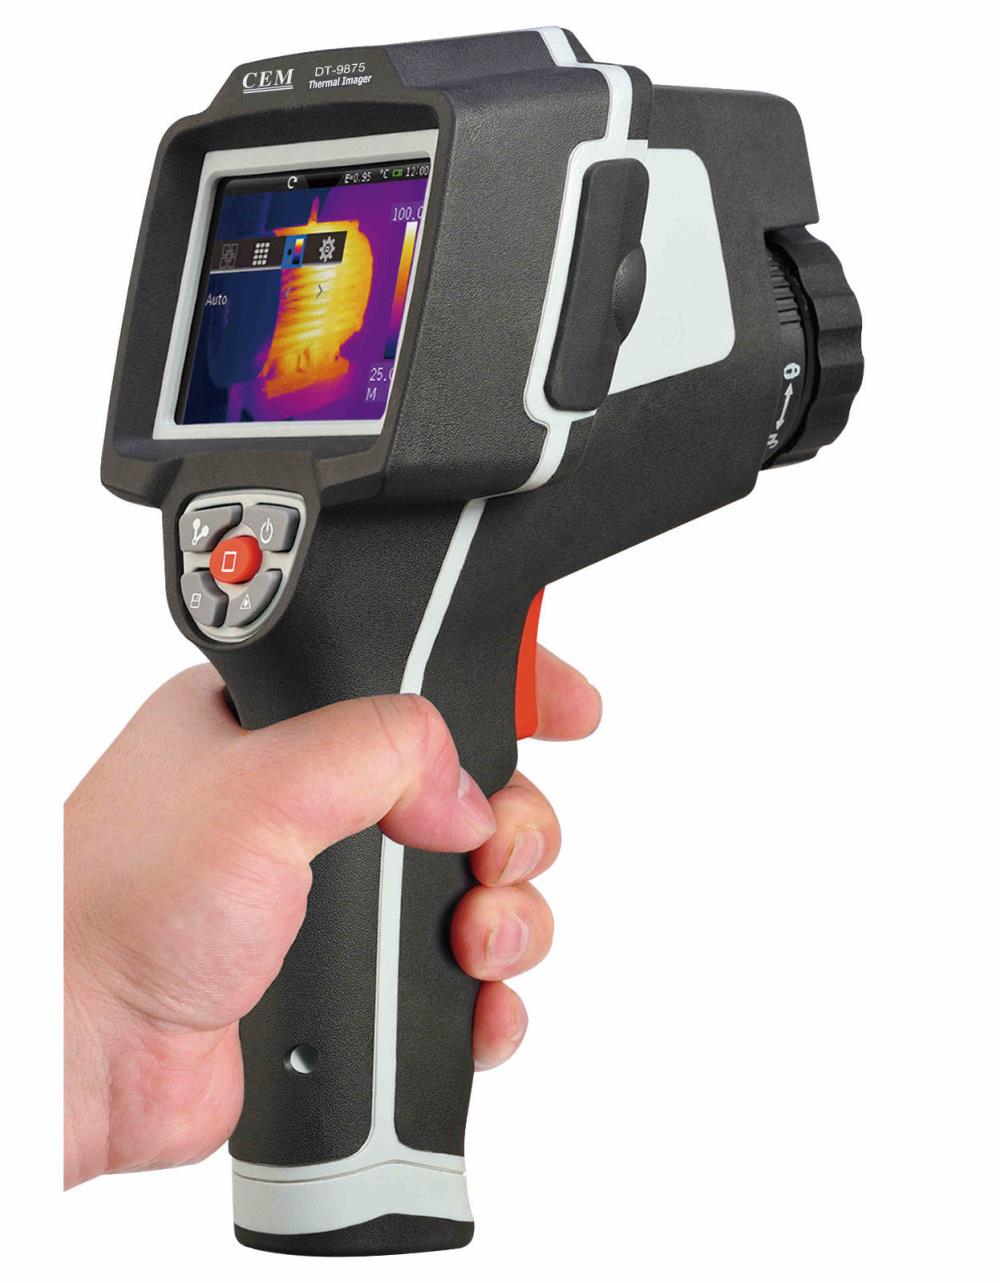 Thermal Imager (กล้องถ่ายภาพความร้อน) ยี่ห้อ CEM รุ่น DT-9875 3.5" TFT, Thermal Imager, กล้องถ่ายภาพความร้อน, เทอร์โมสแกน, Thermography camera, CEM, DT-9875,เทอร์โมสแกน ราคา,CEM,Instruments and Controls/Thermometers